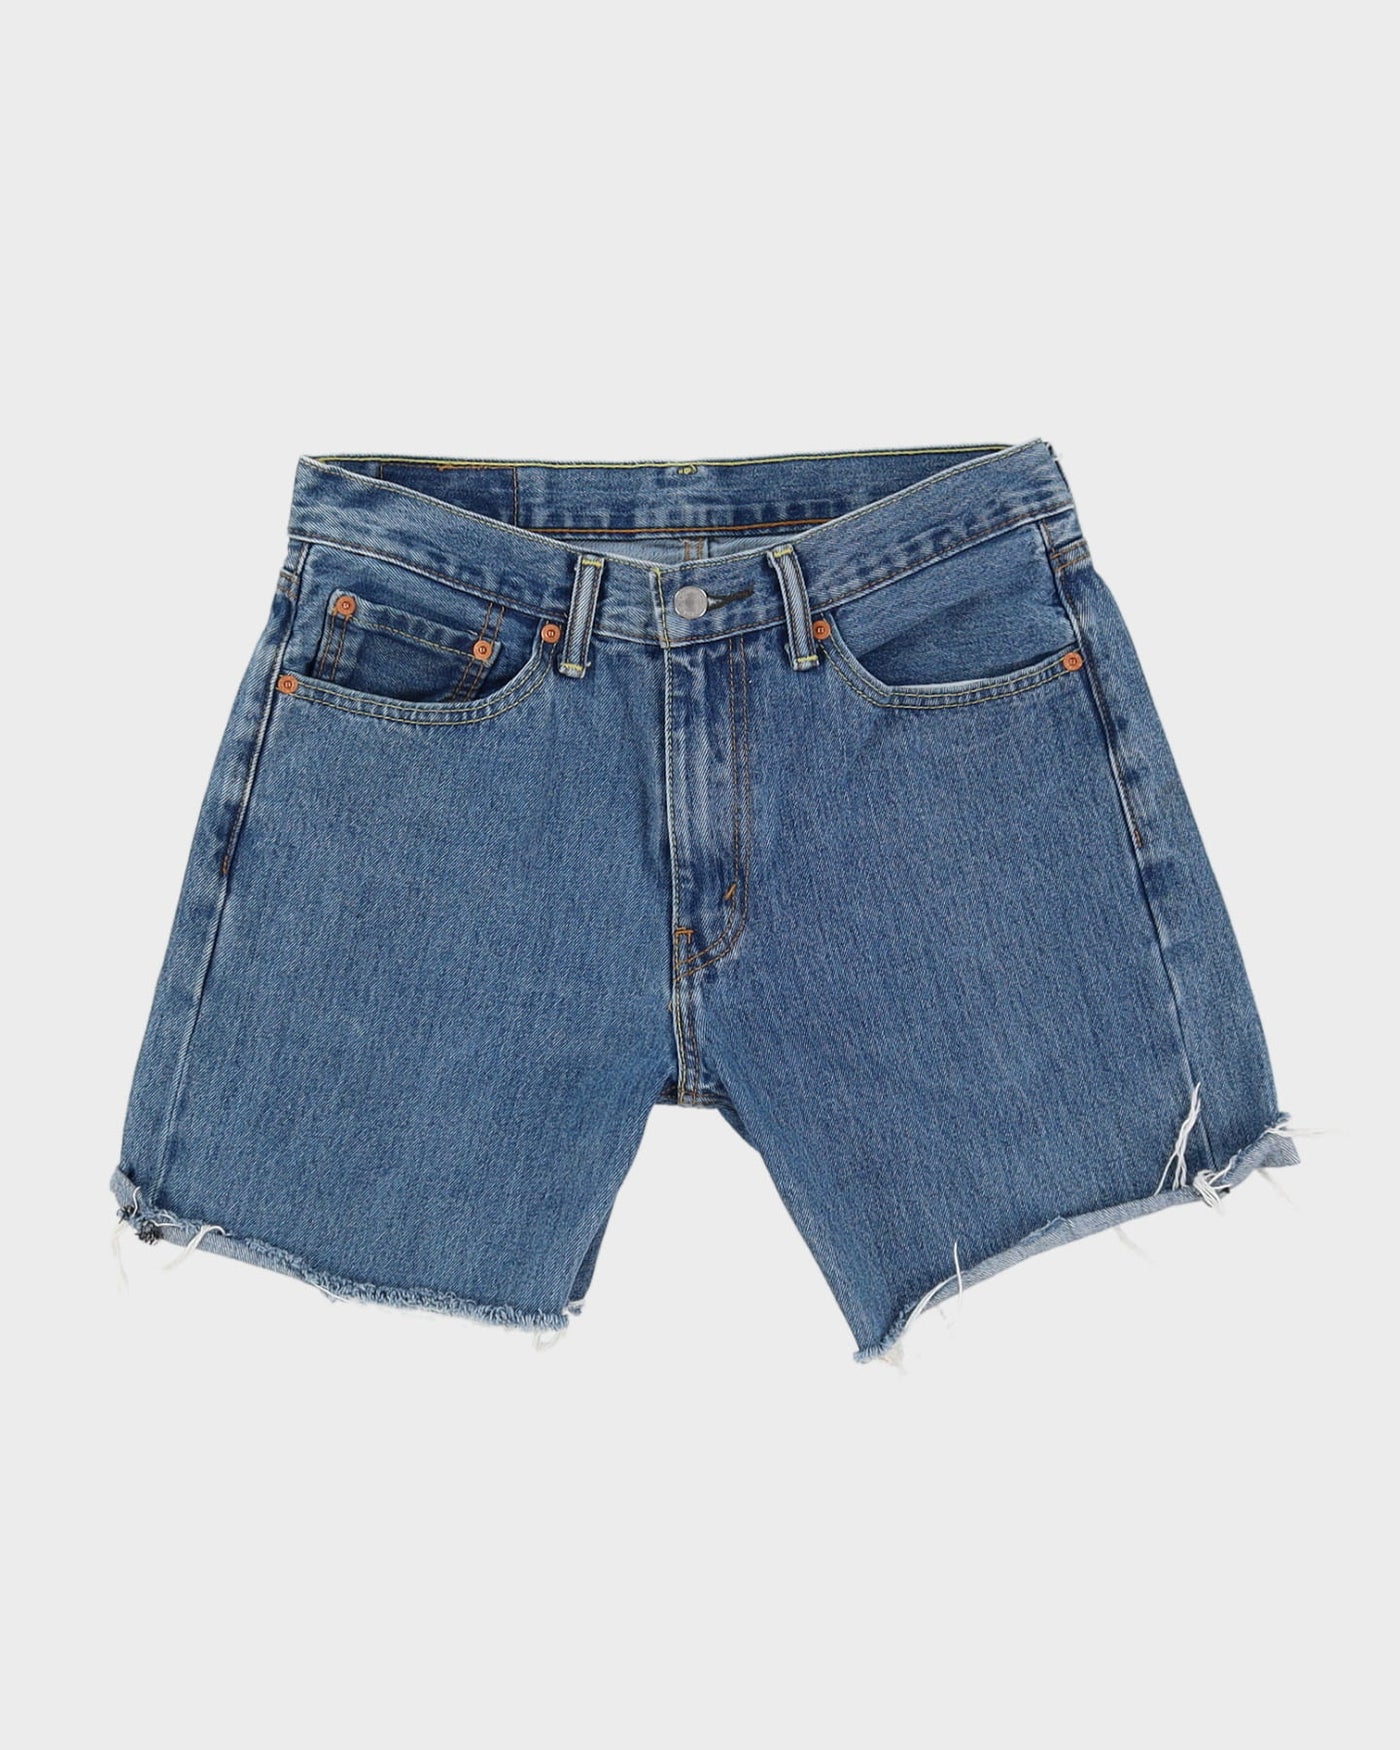 Levi's Blue Denim Shorts - W32